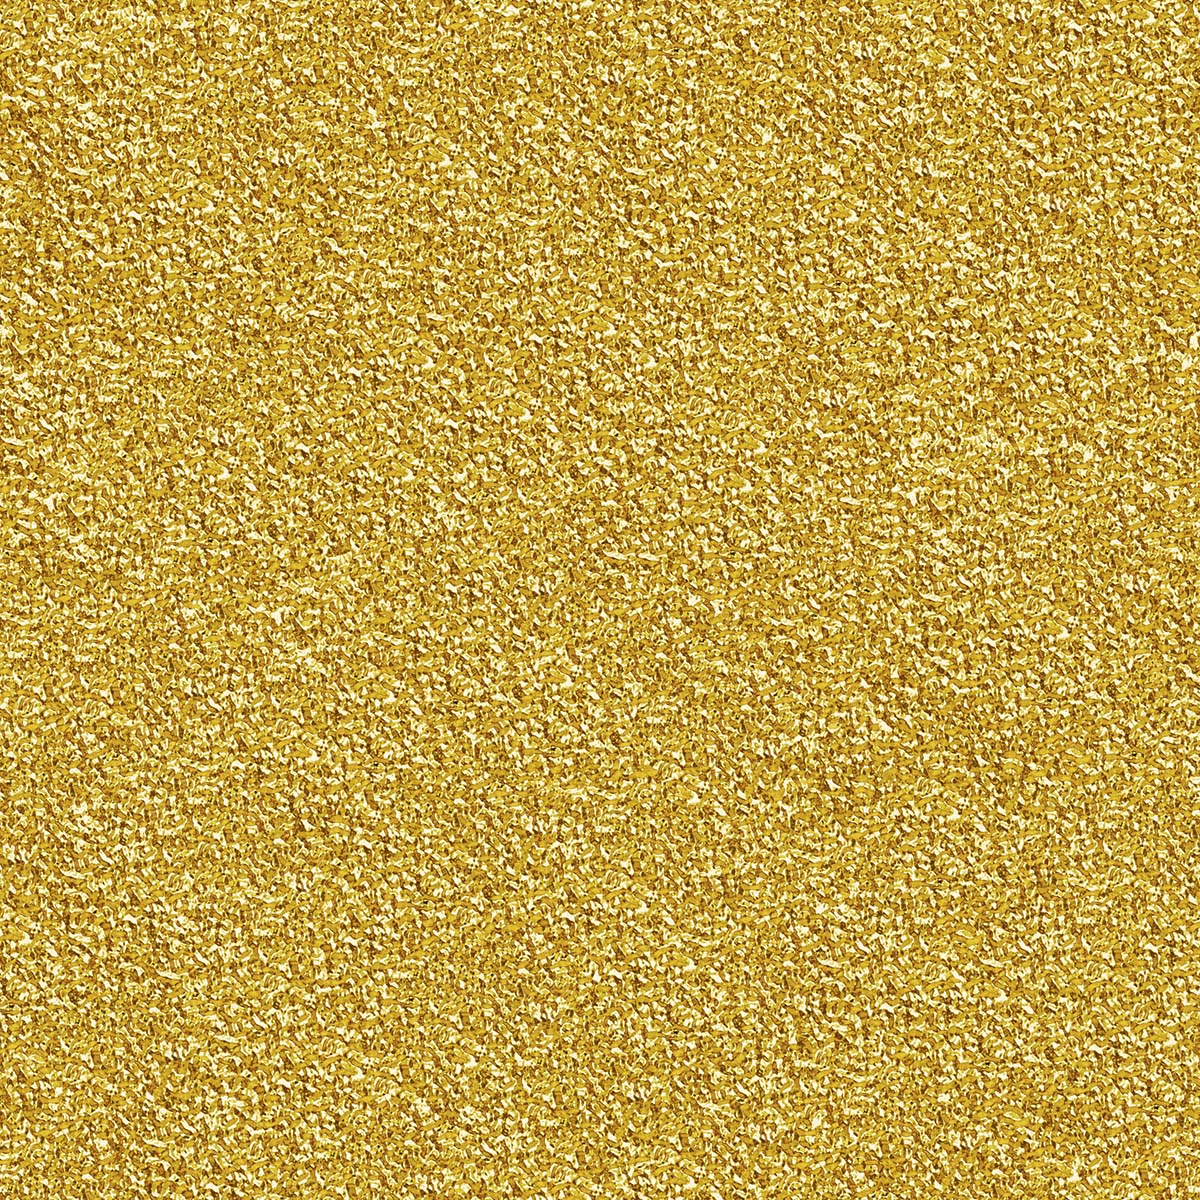 A yellow glittery surface